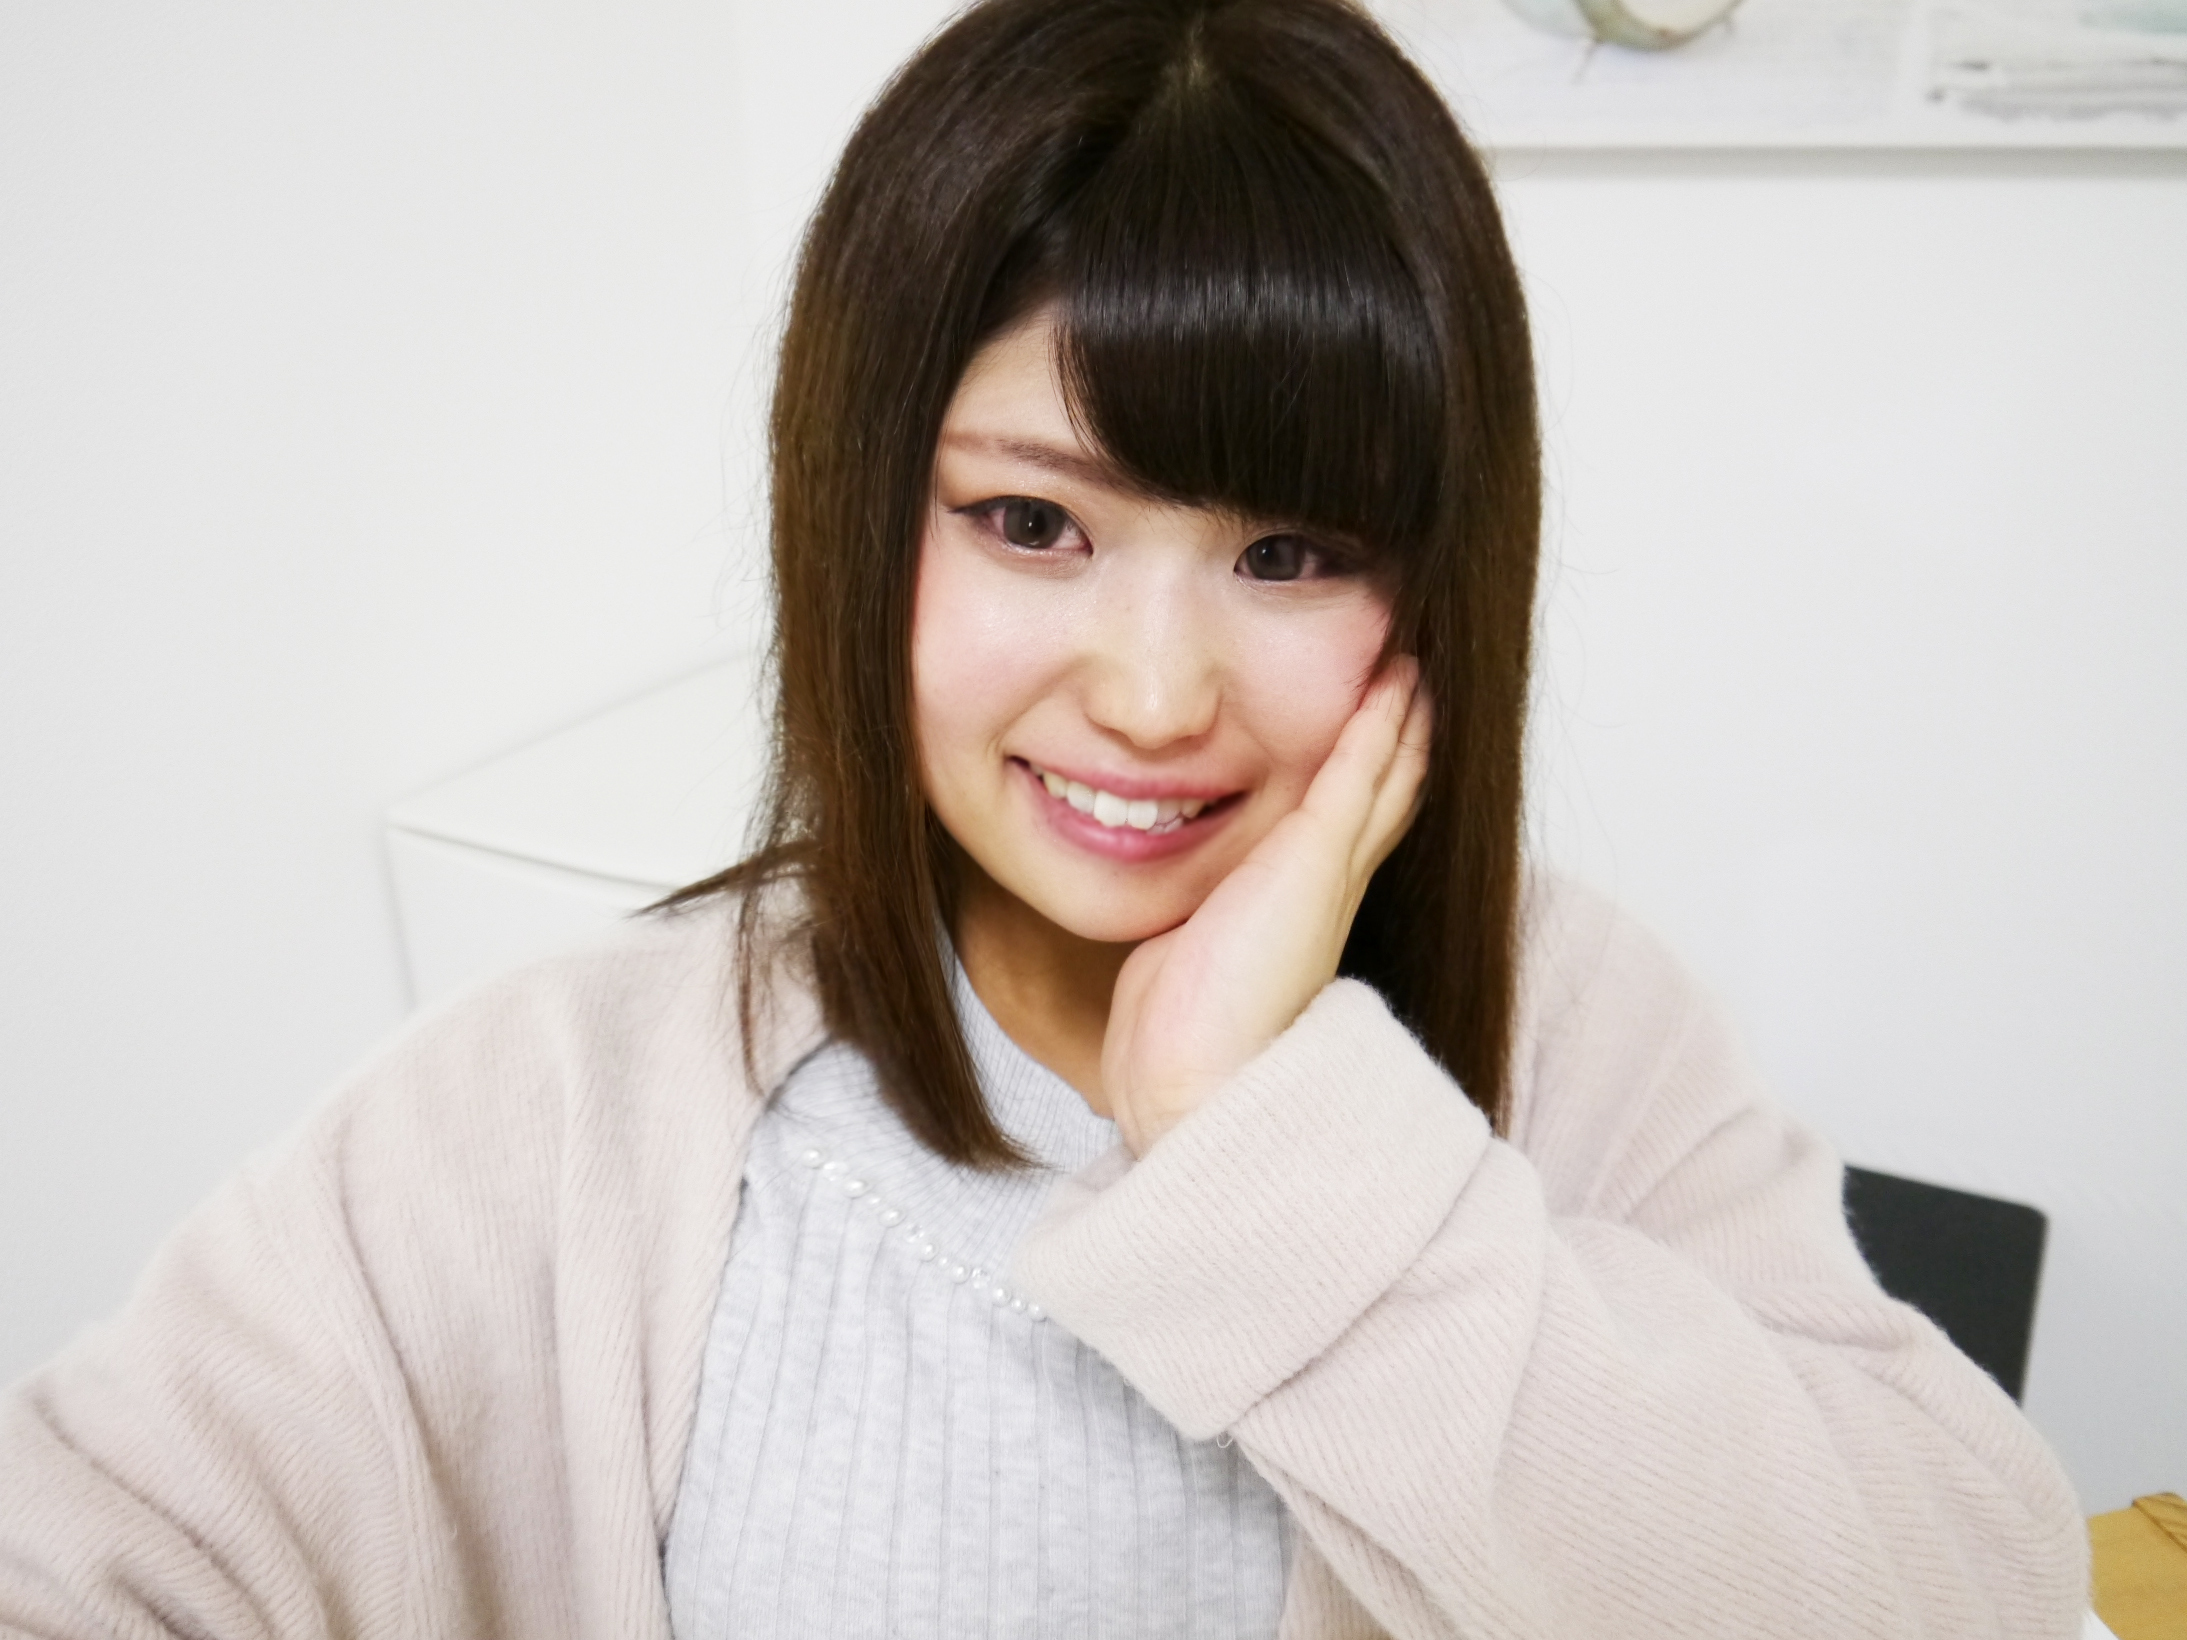 MANAMIhj - Japanese webcam girl